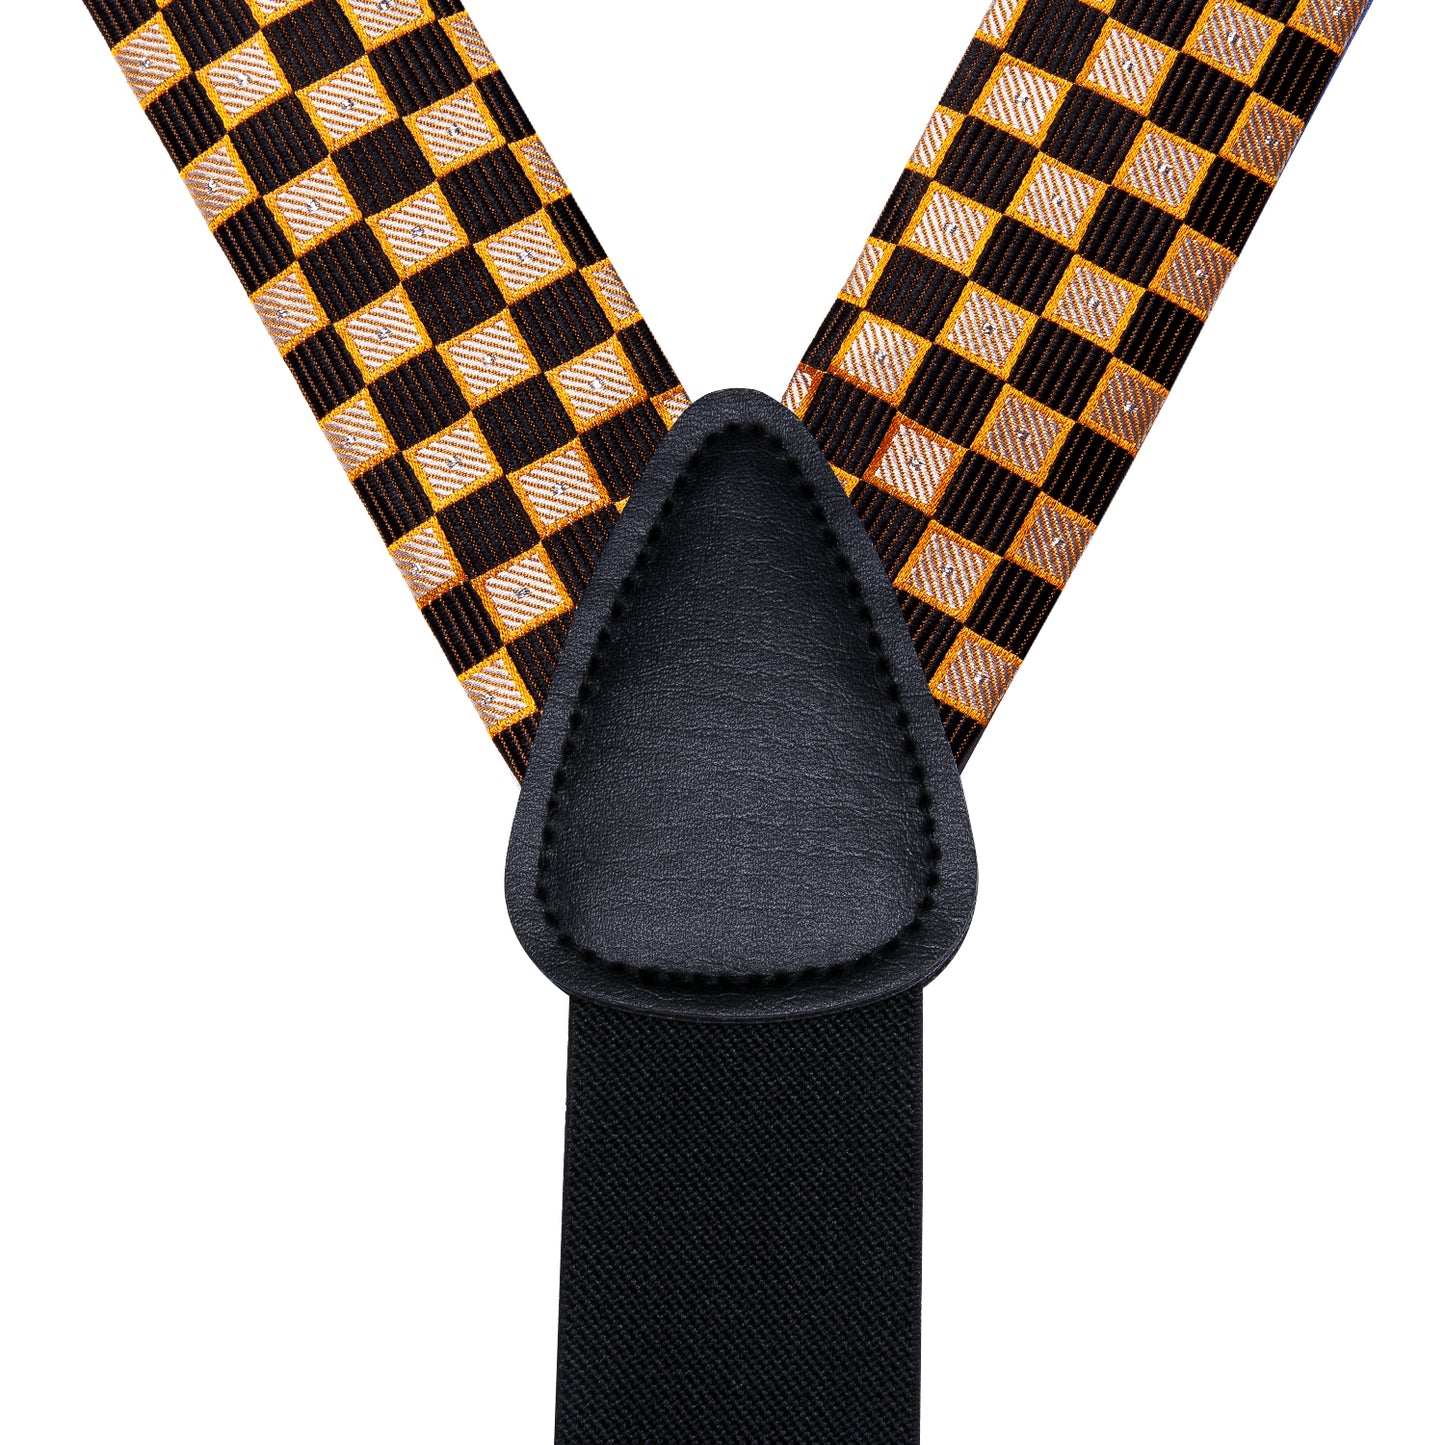 BD3049 Men's Braces Designer Clip Suspender Set [Cheque Brown]